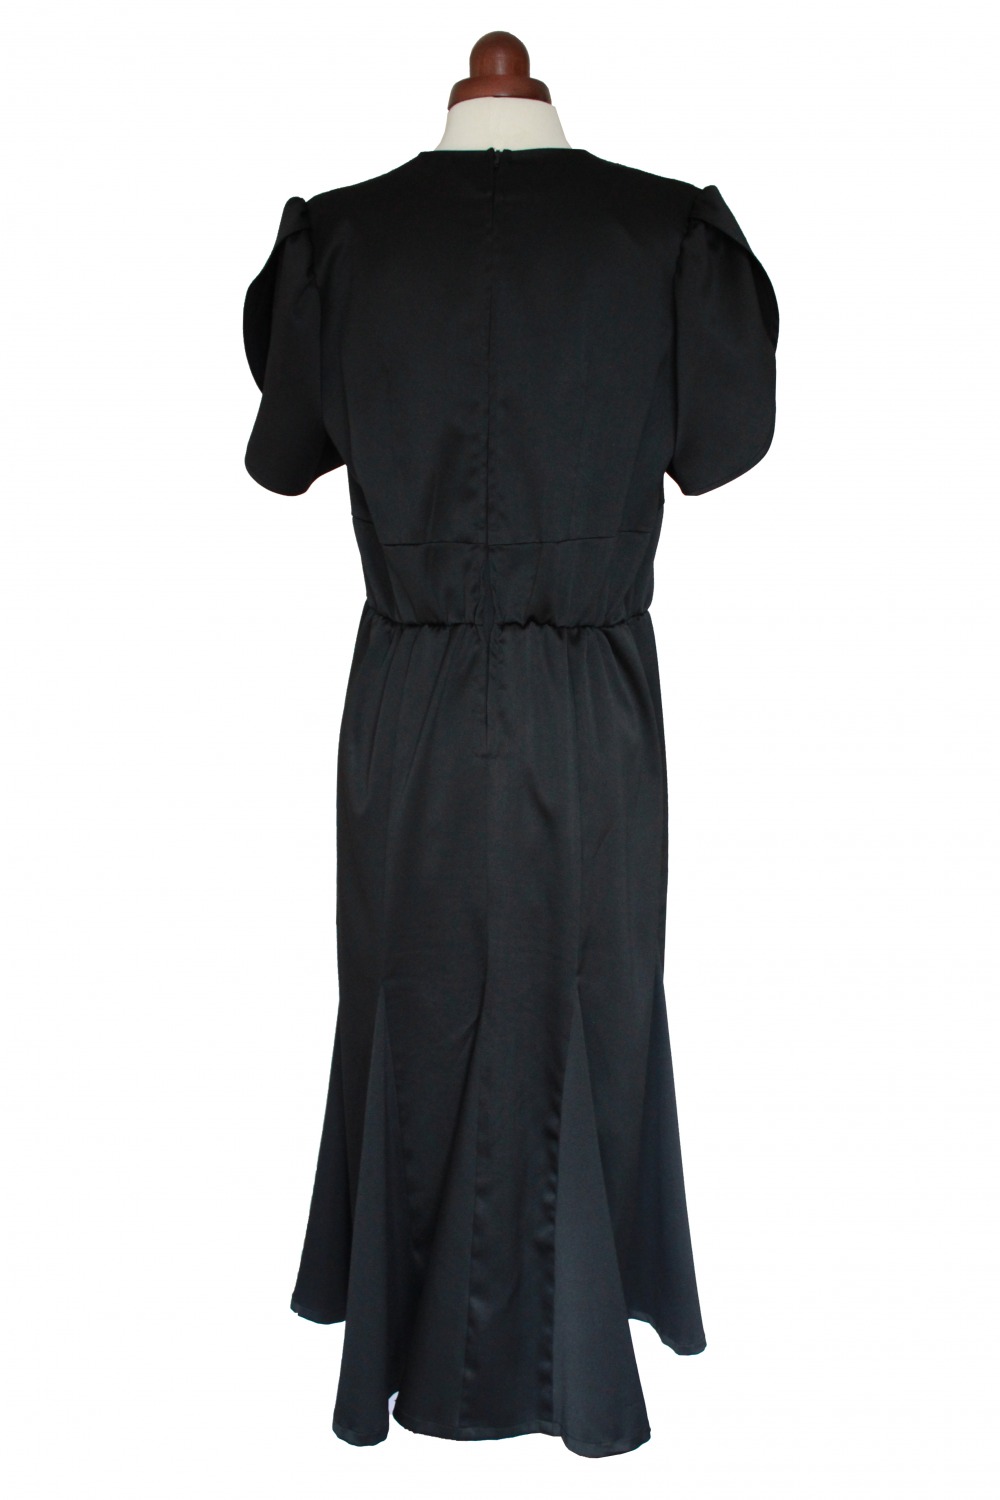 Ladies 1940s Wartime WW11 Goodwood Evening Dress Size 14 - 16  Image